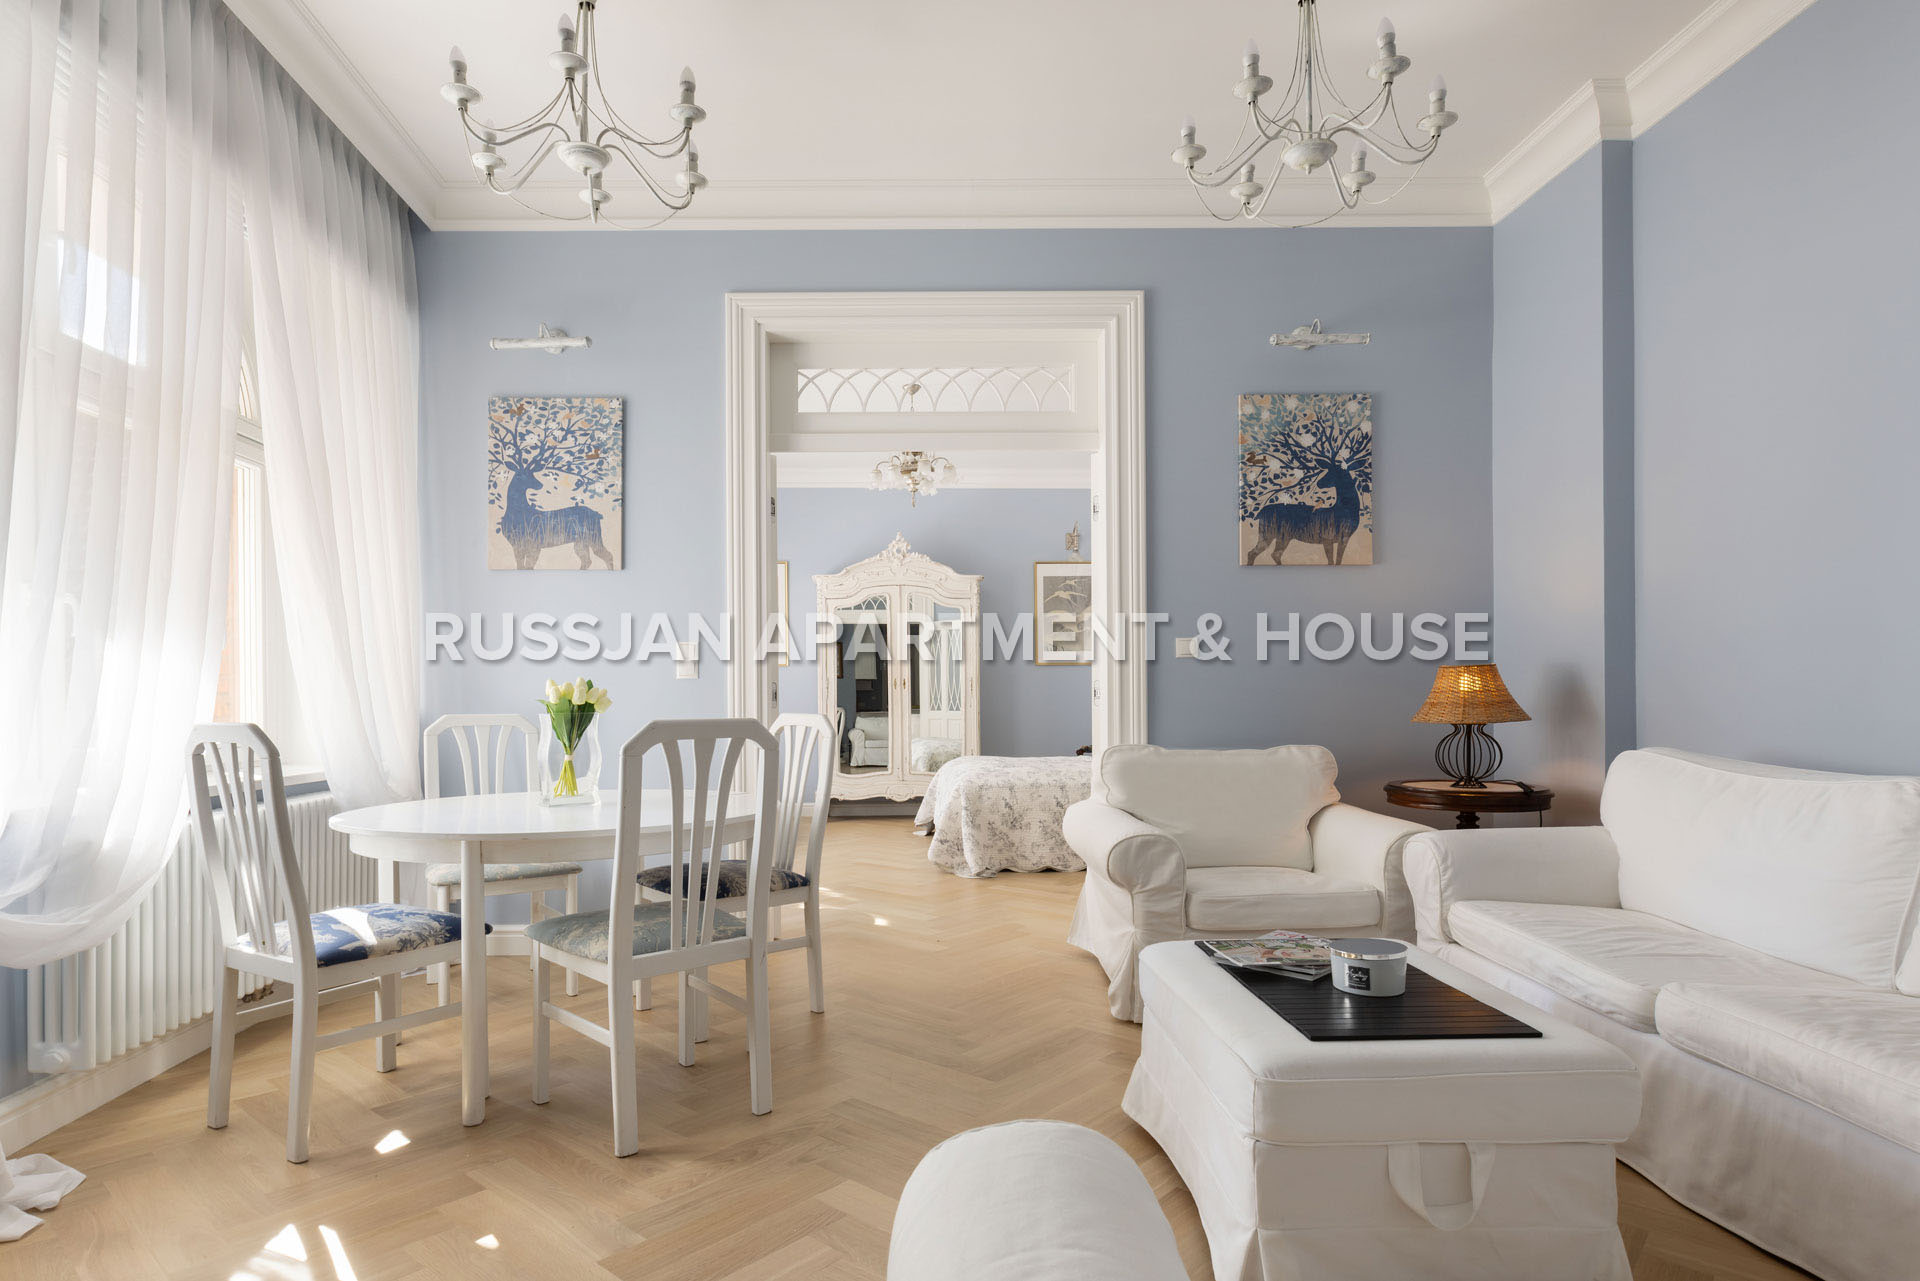  Ulica Parkowa | RUSSJAN Apartment & House